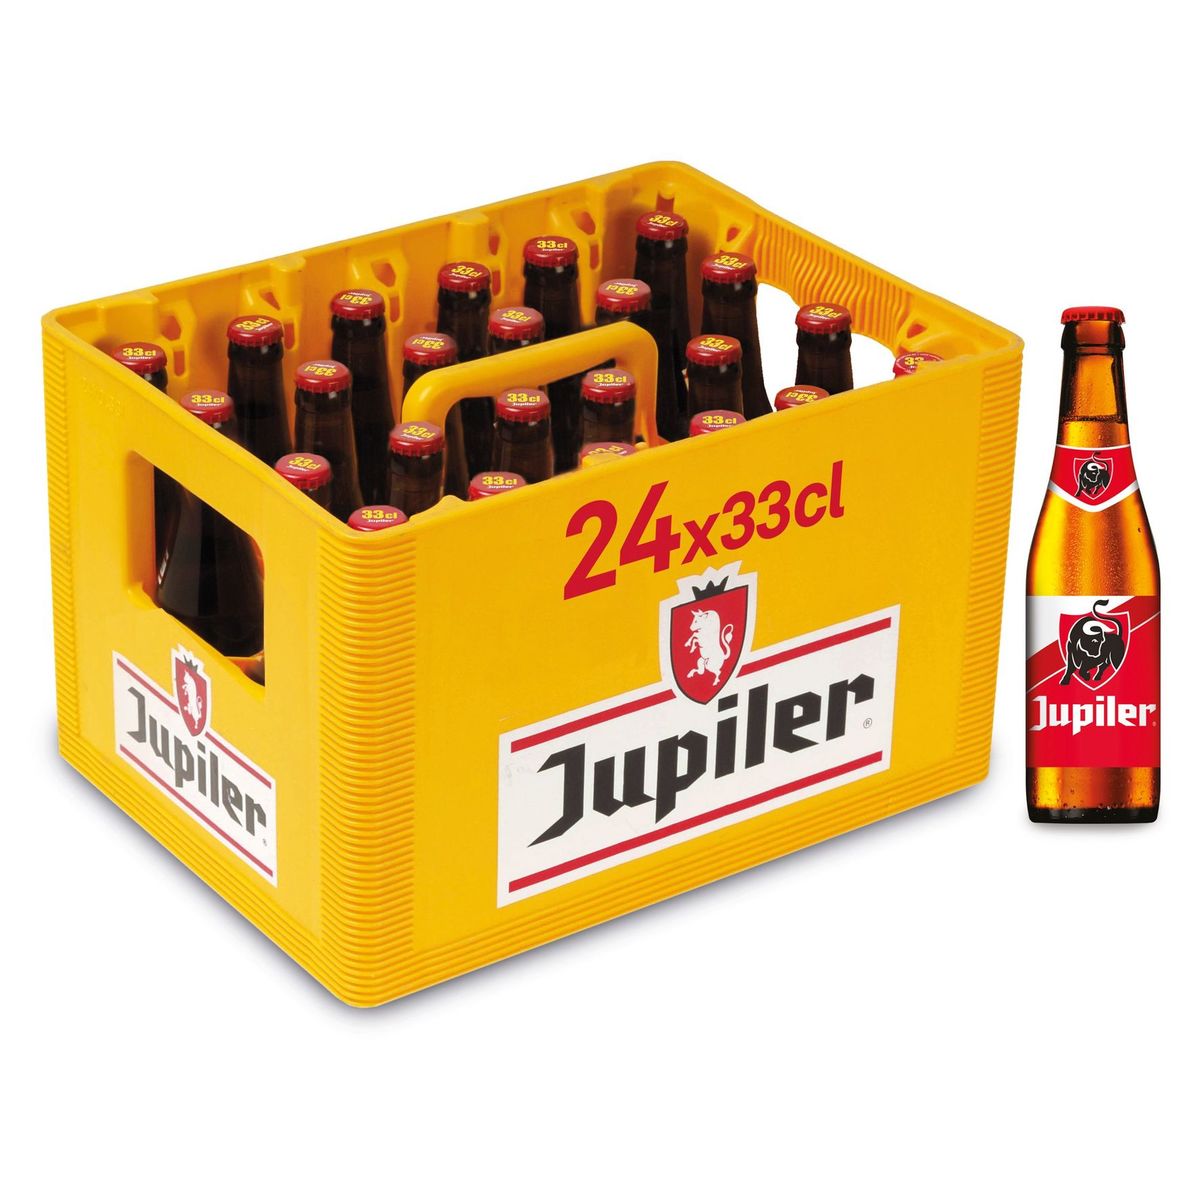 Jupiler Blond Bier Krat 24 x 33 cl